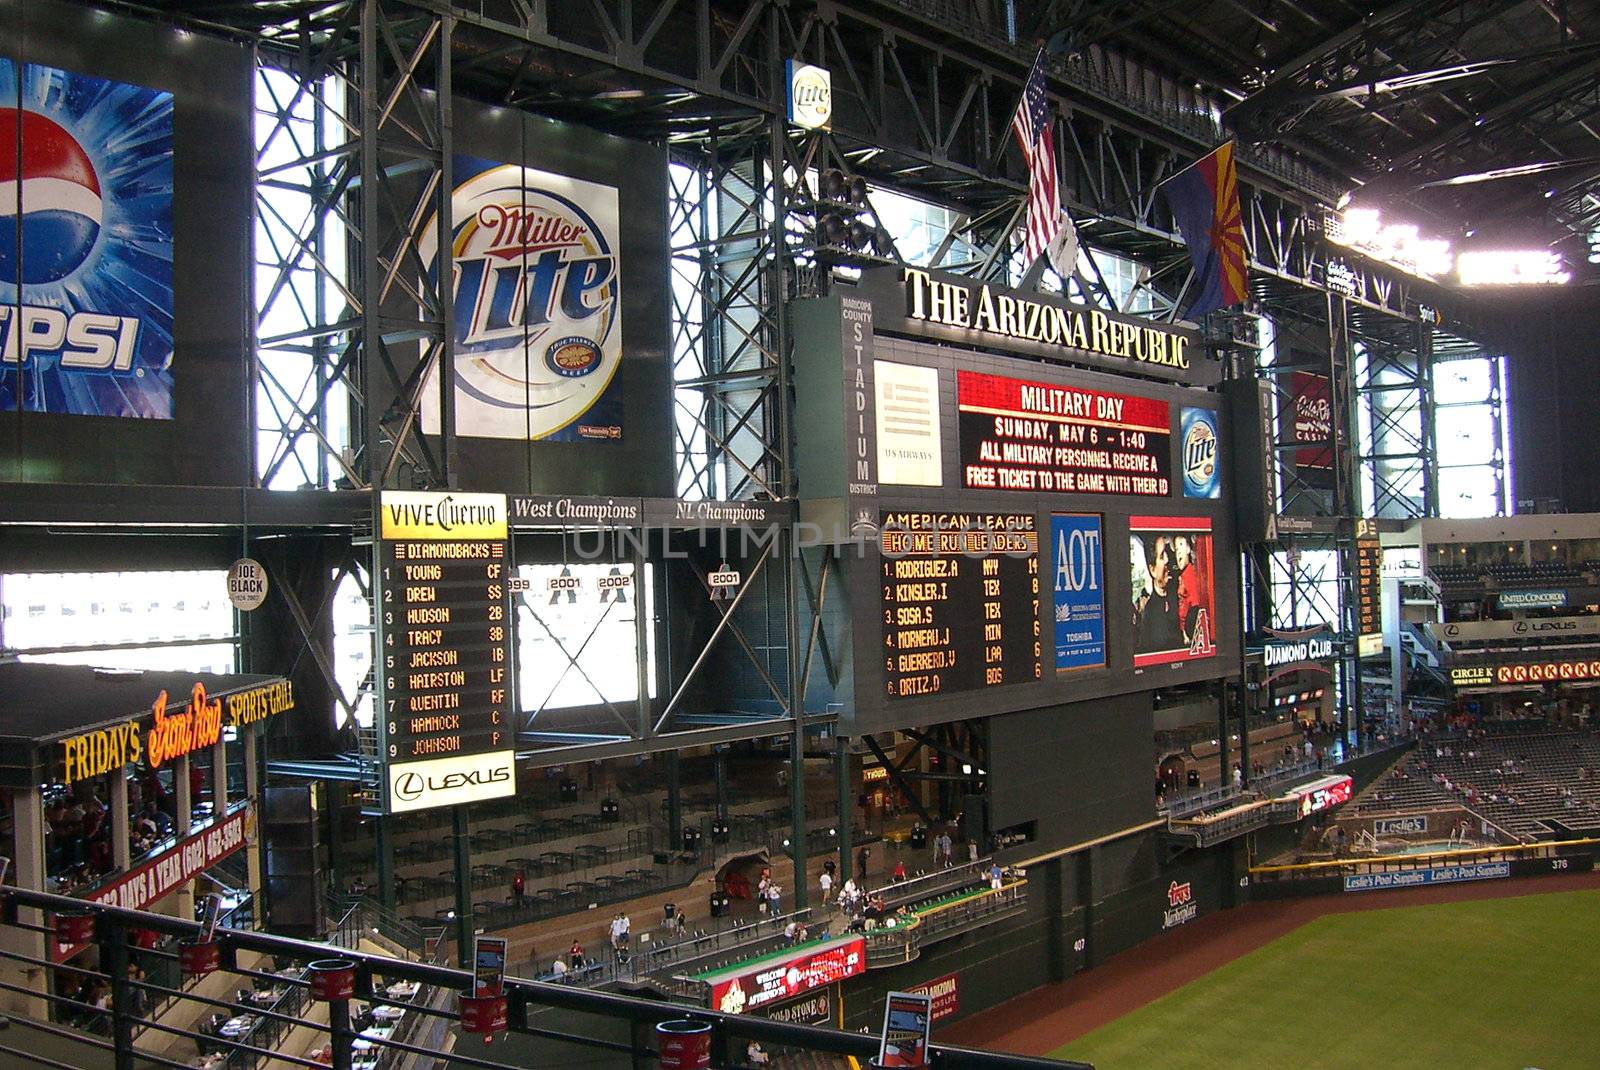 Large scoreboard displayed at Phoenix baseball field, under a closed dome.